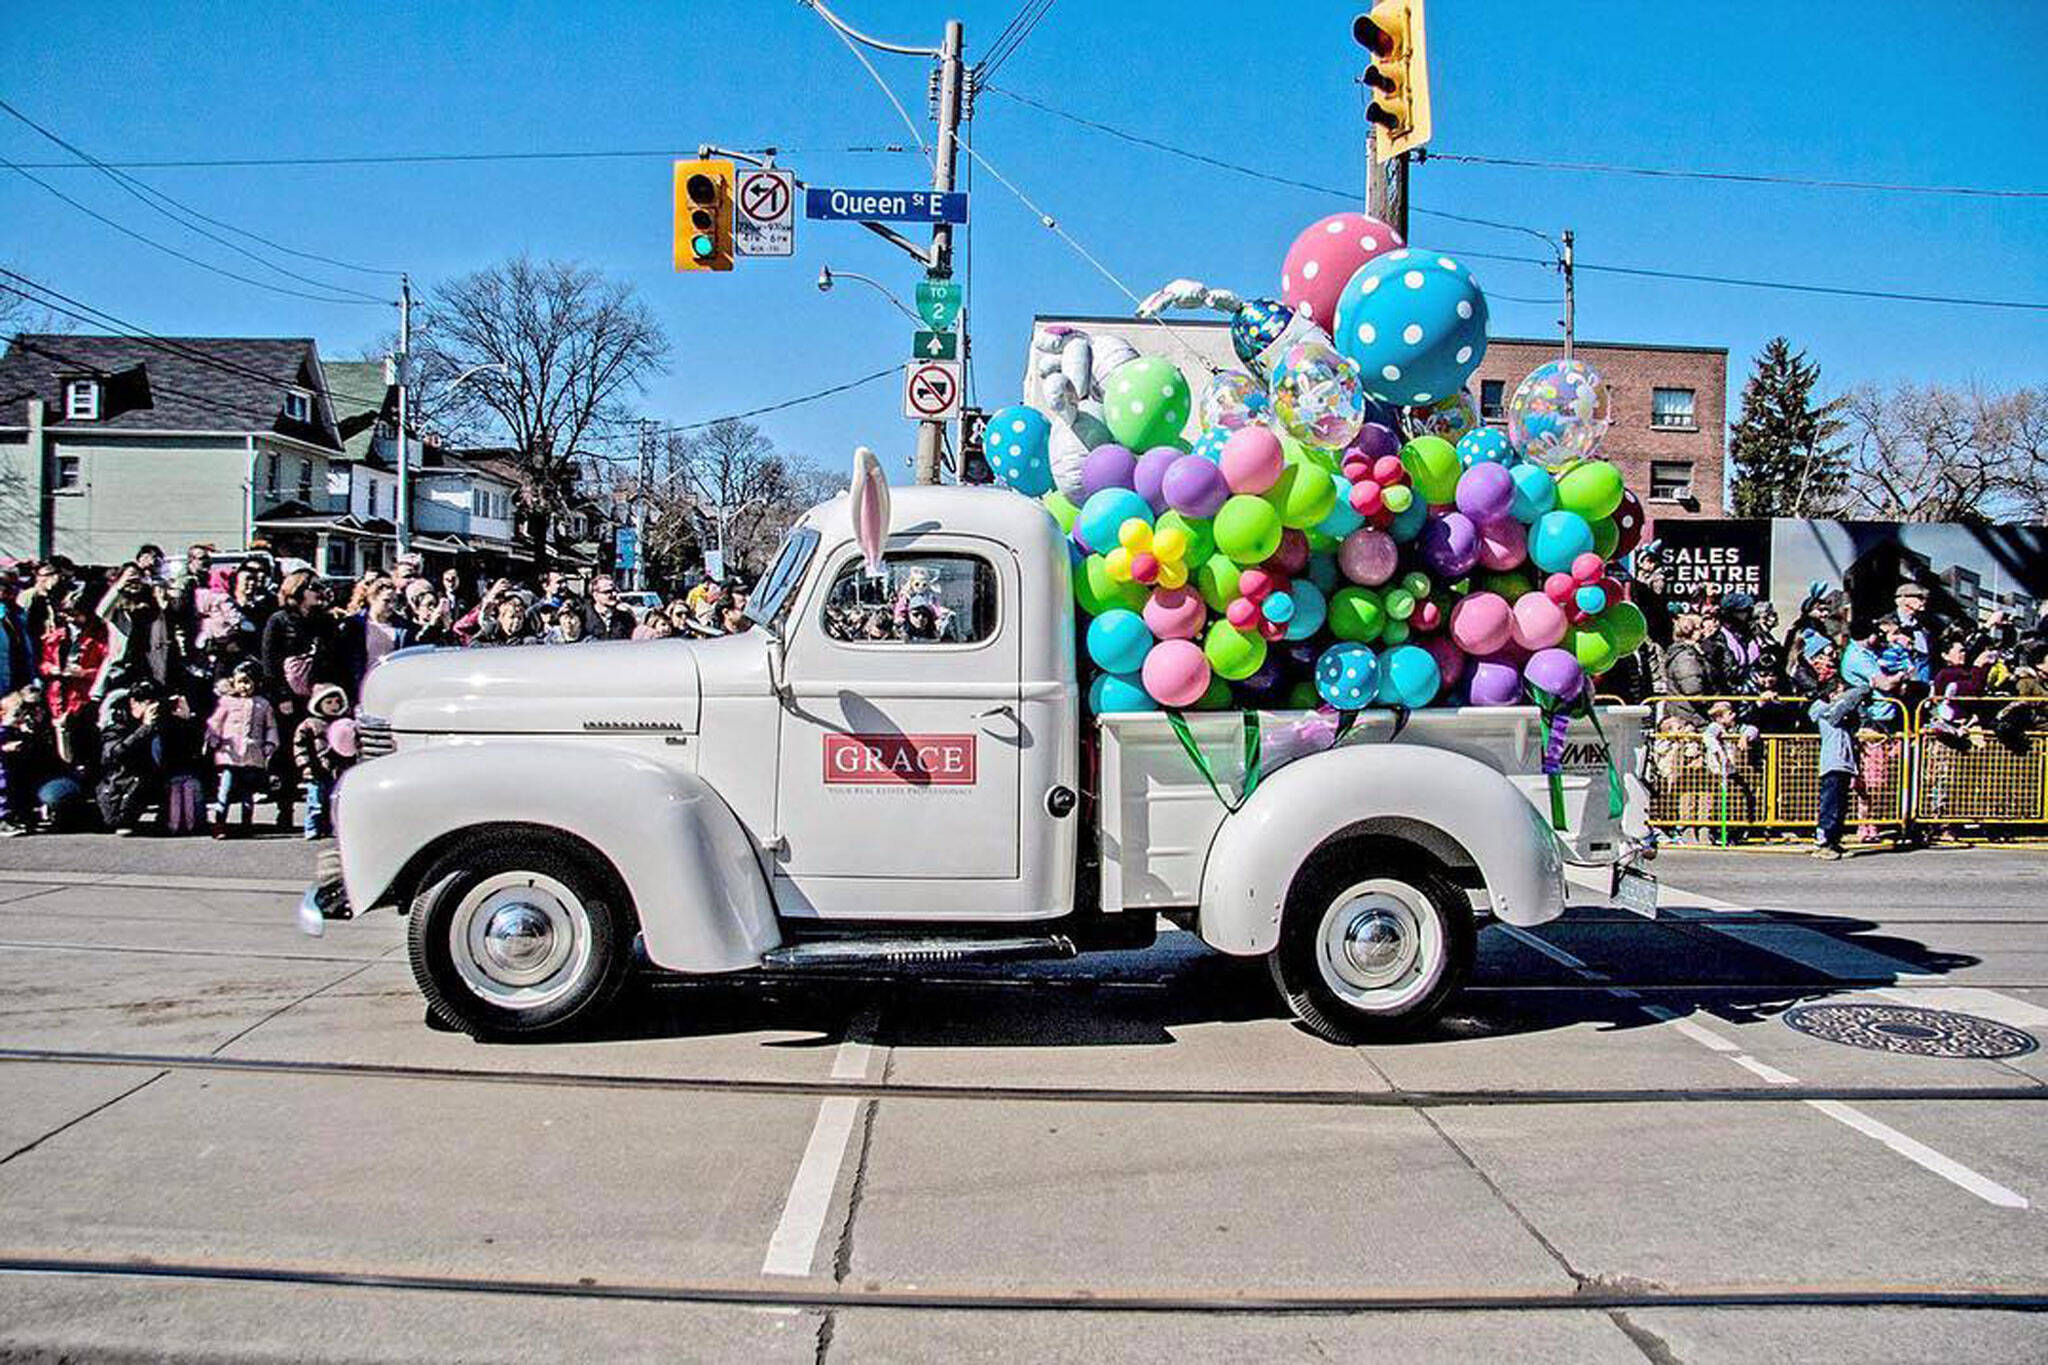 Toronto is getting a drivethru illuminated Easter parade at night